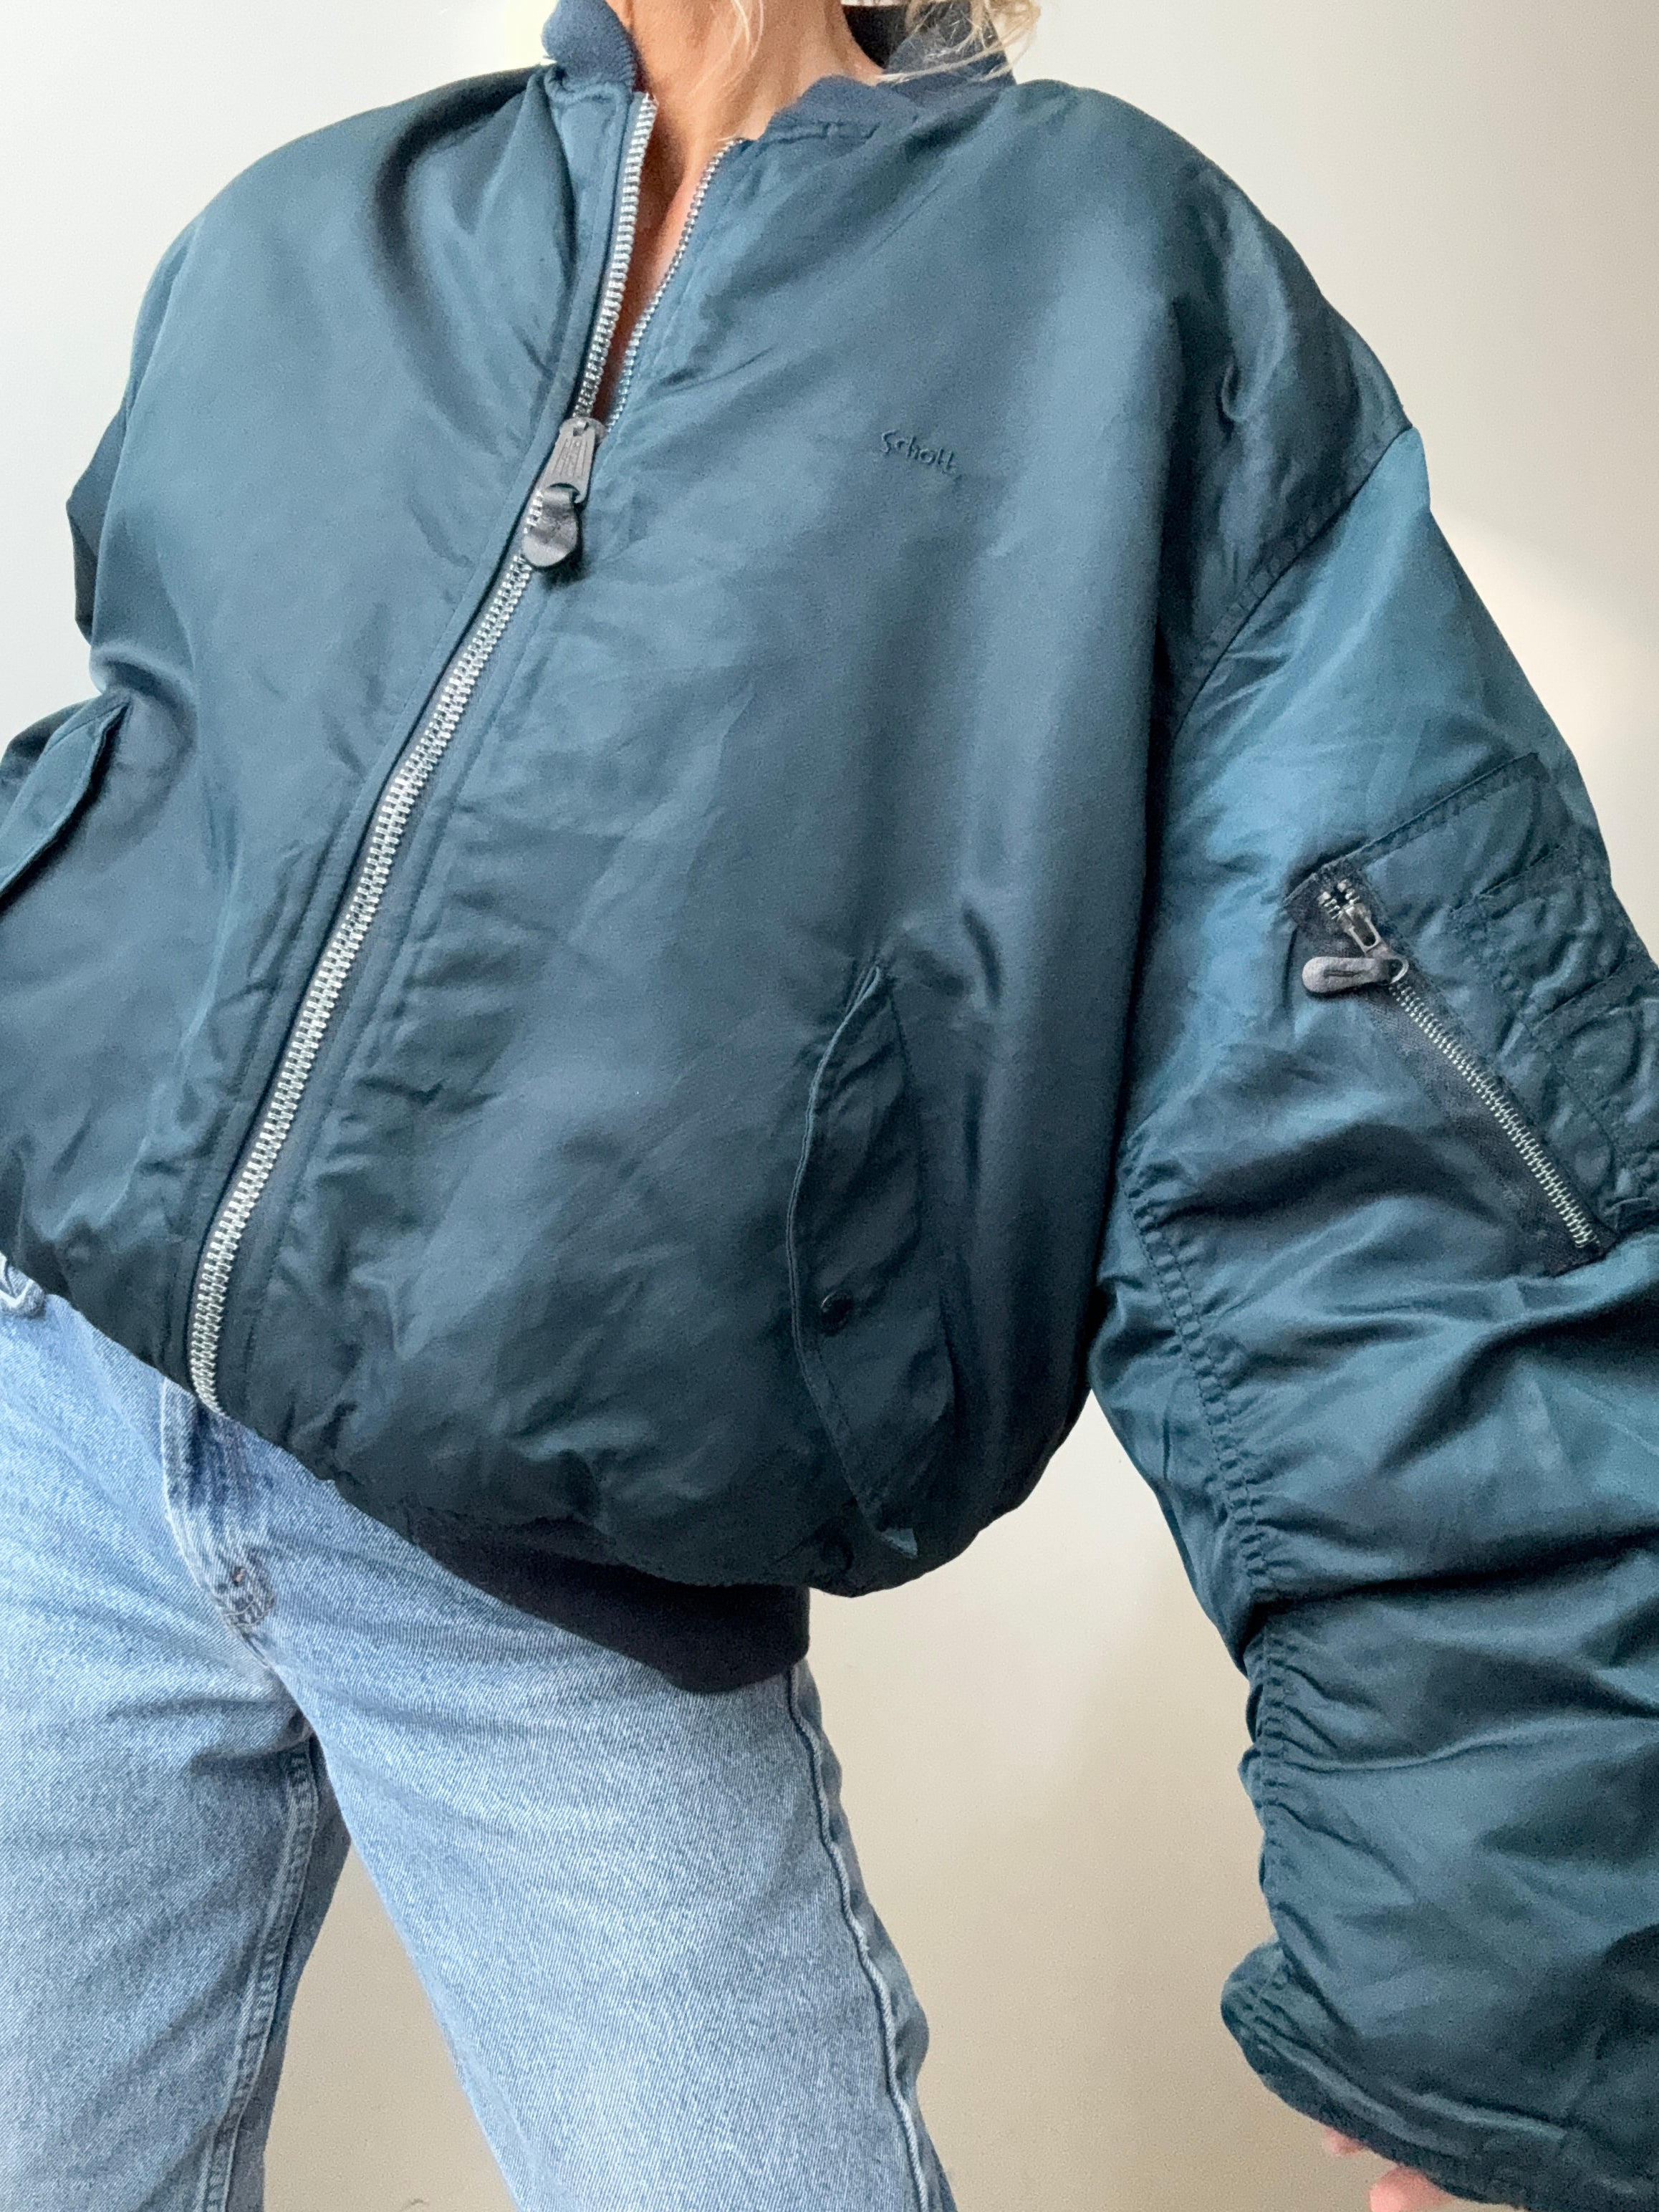 Future Nomads Jackets Extra Large Vintage Teal Blue Bomber Jacket